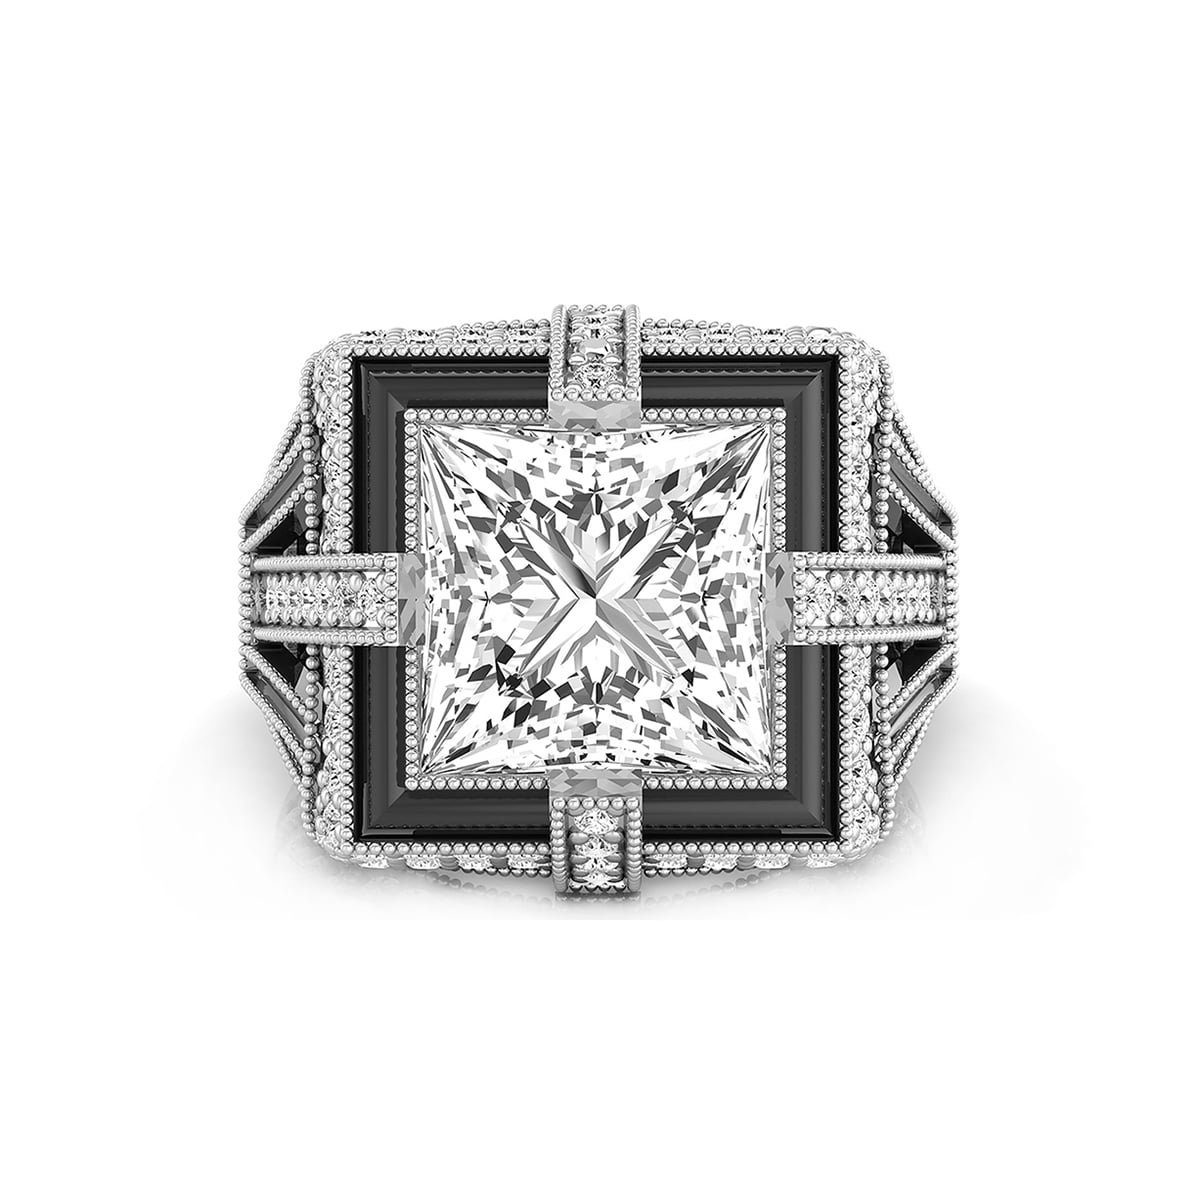 Princess Cut CZ Stone Art Deco Black Enamel Vintage Look Ring For Women